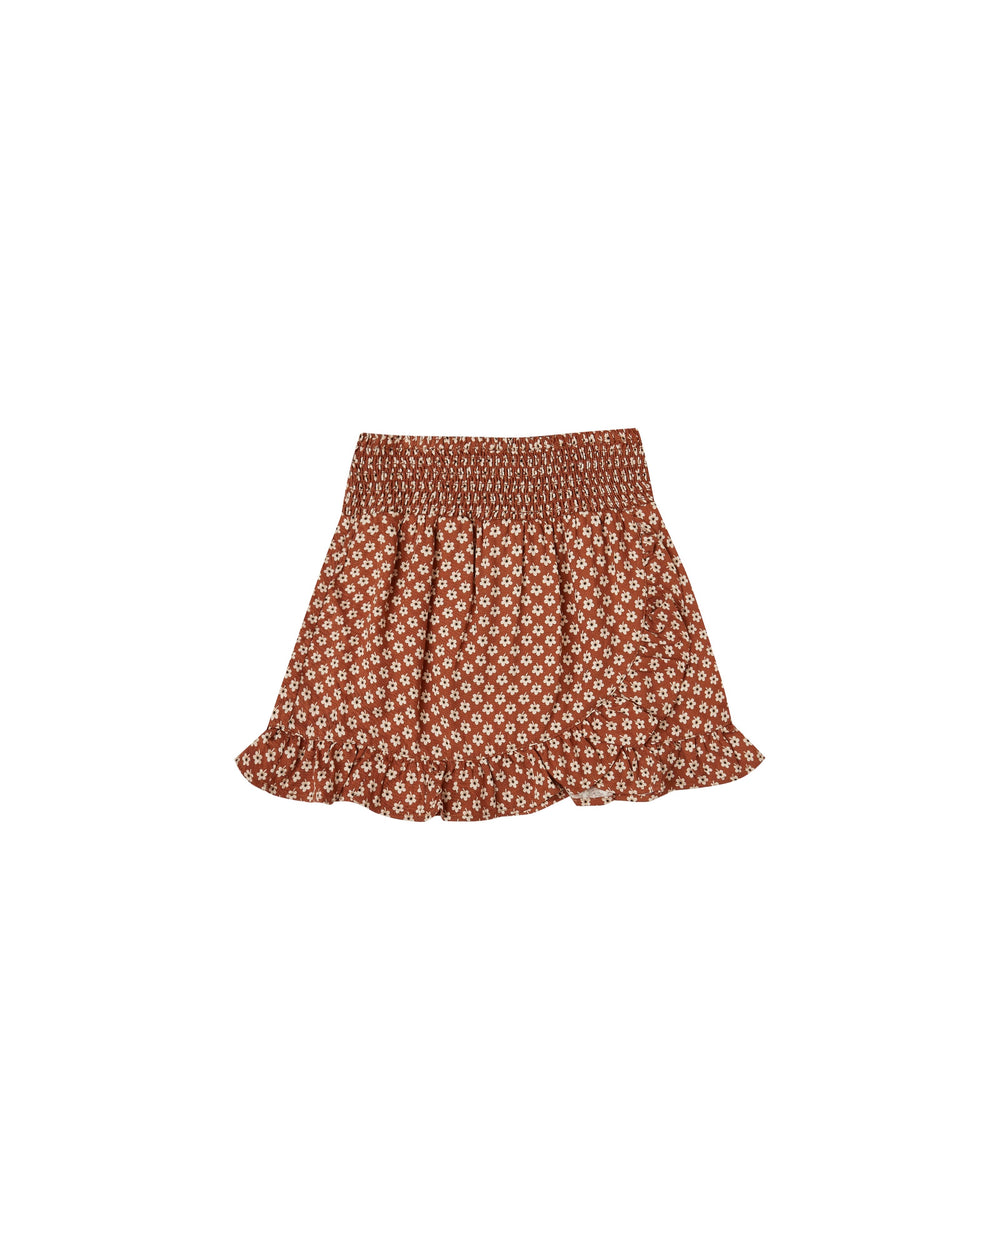 Flower power wrap ruffle skirt || Amber